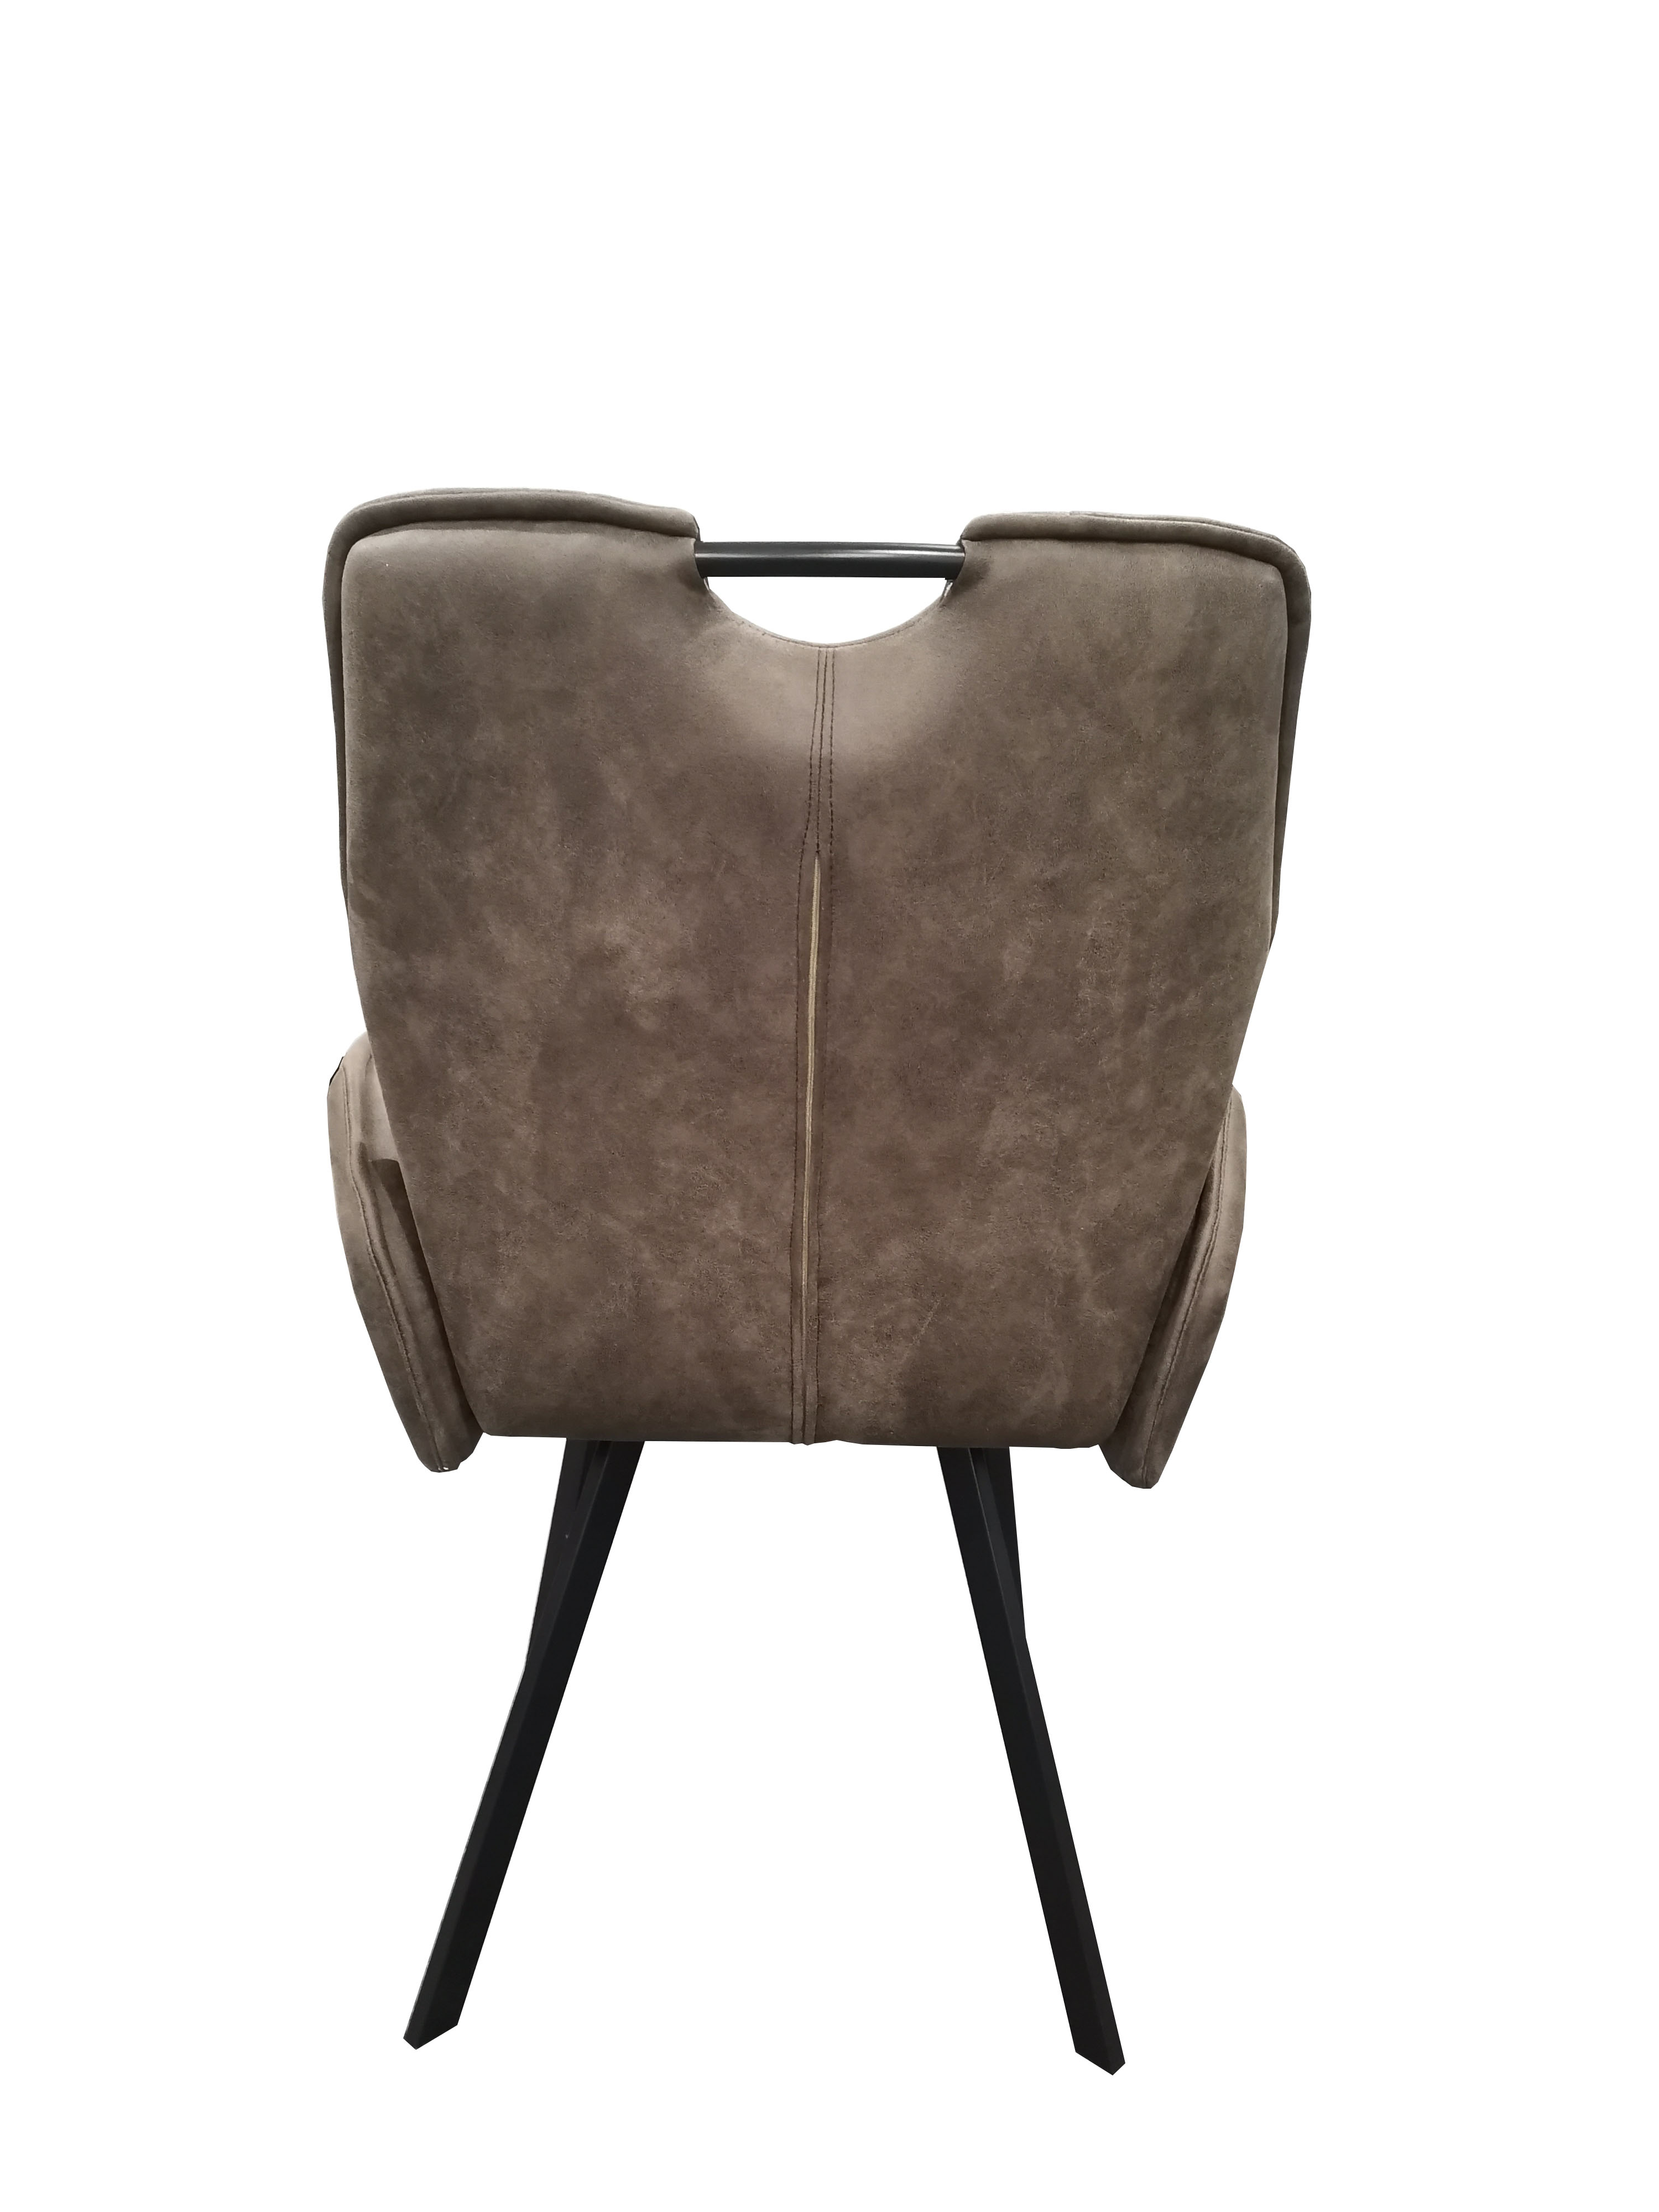 Modern design fabric seat metal leg dining chair